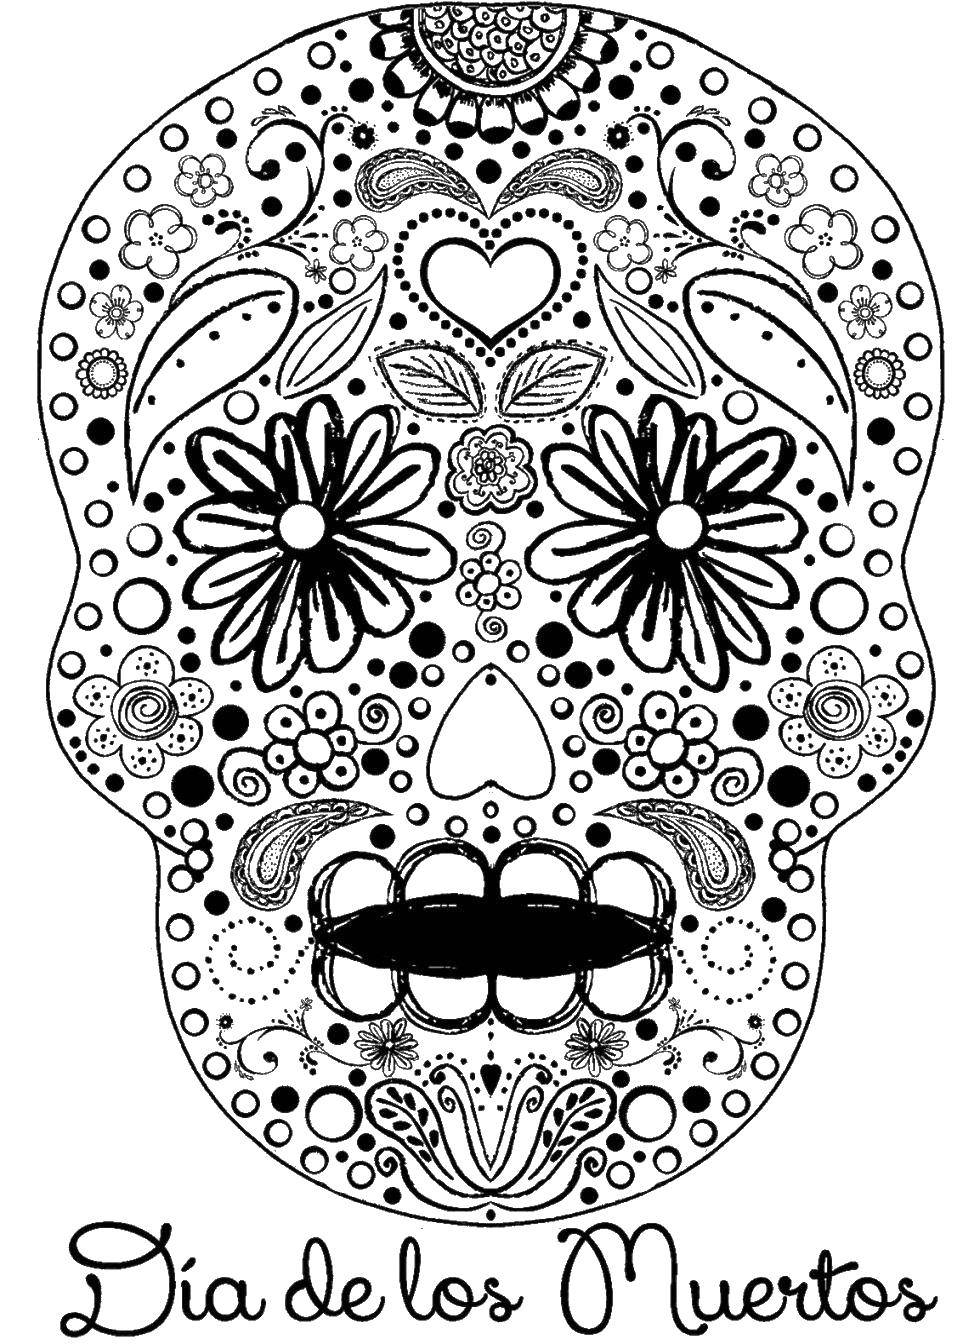 Coloring Patterned crock. Category Skull. Tags:  Skull, patterns.